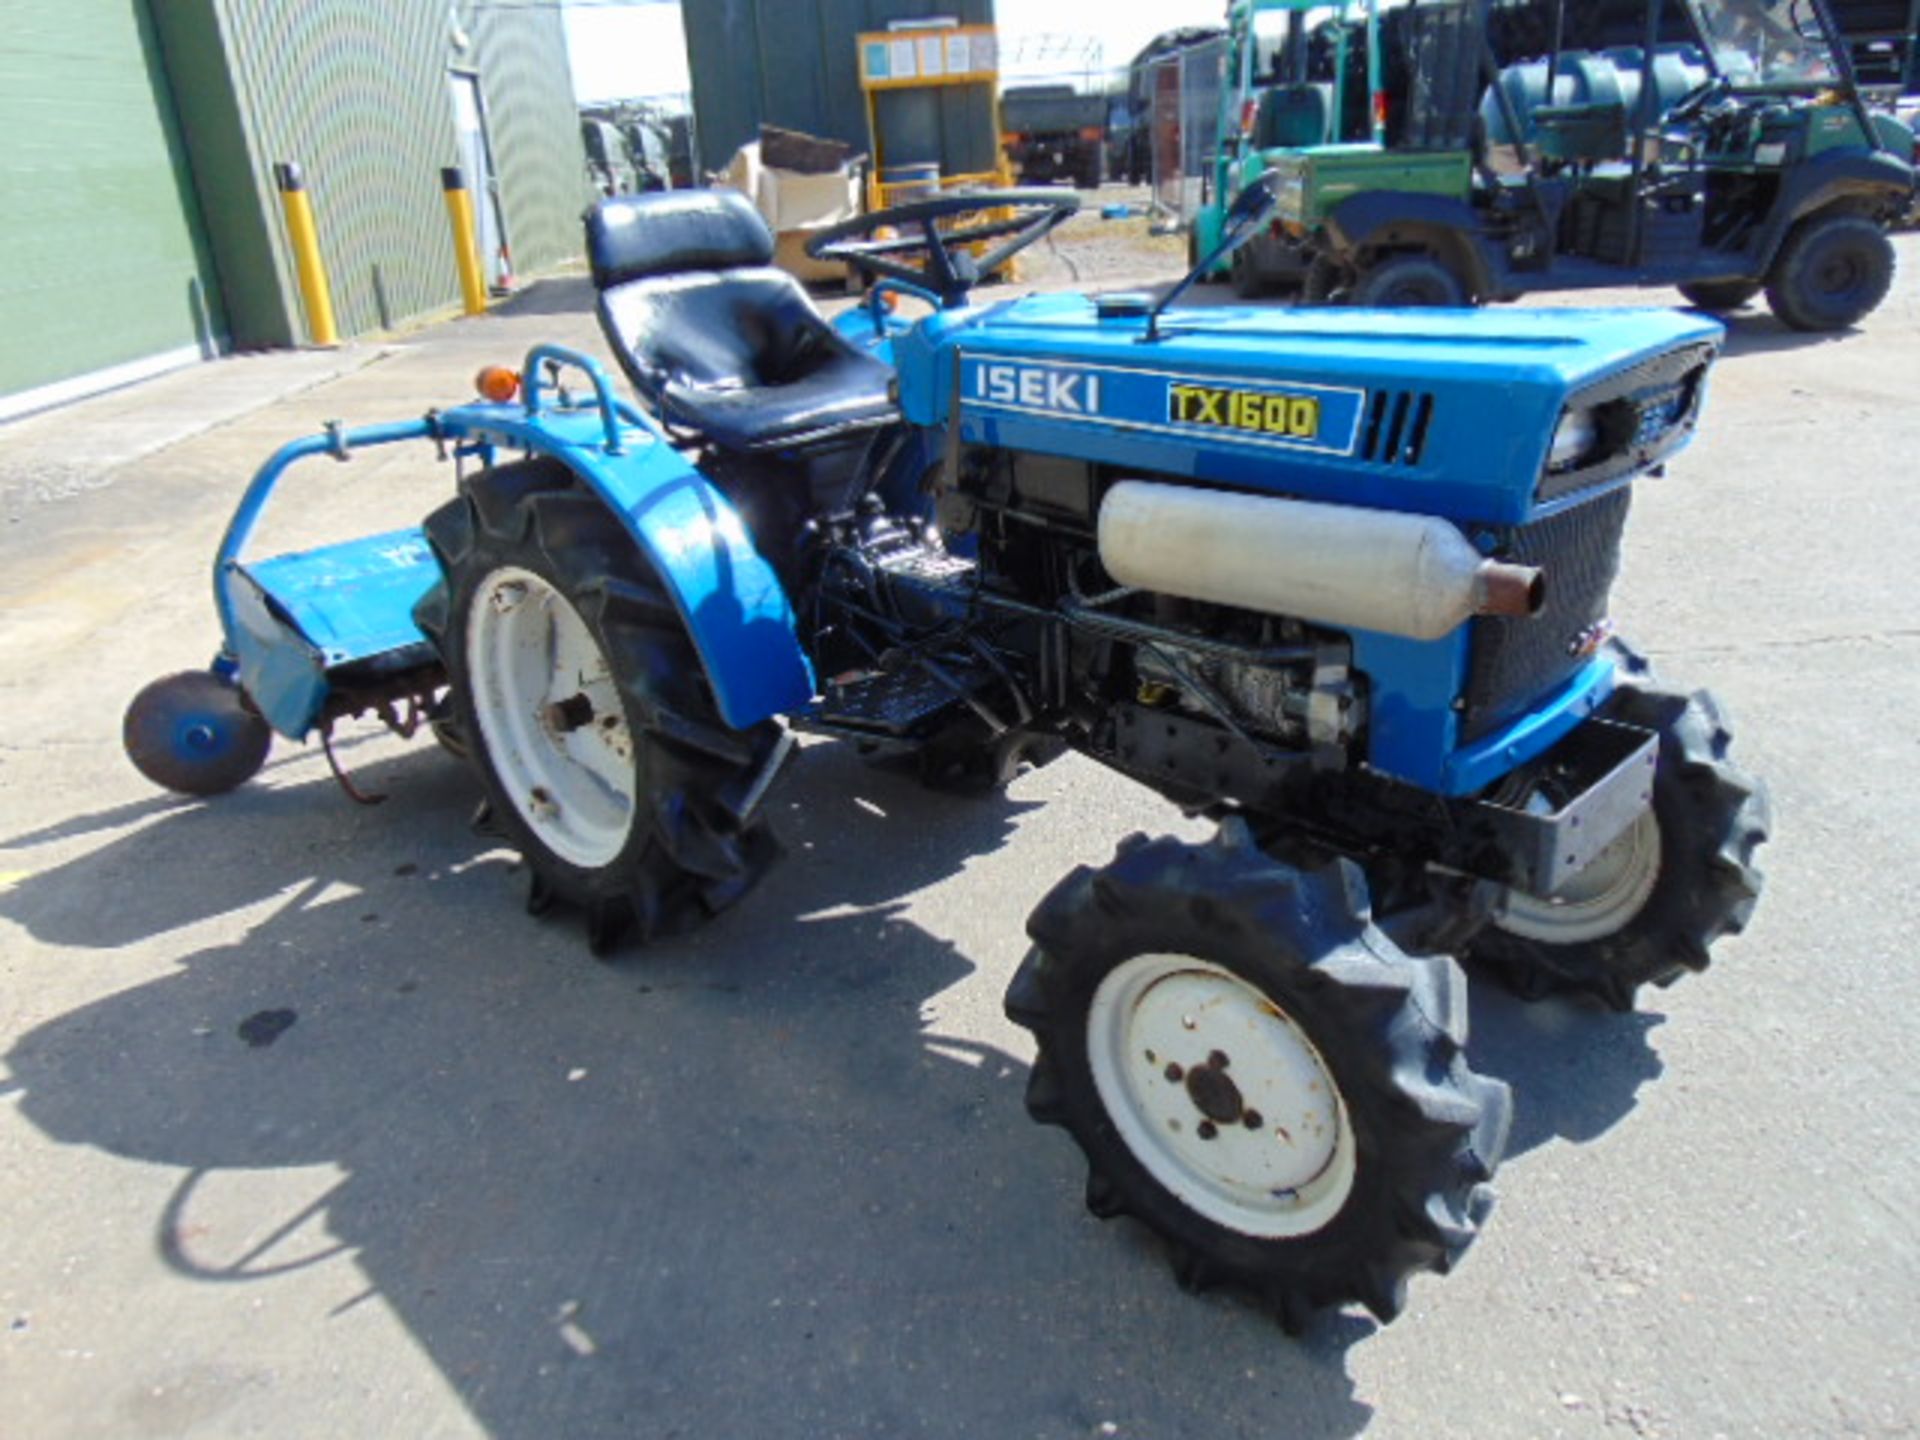 Iseki TX1500 4x4 Compact Tractor c/w Rotavator - Image 3 of 19